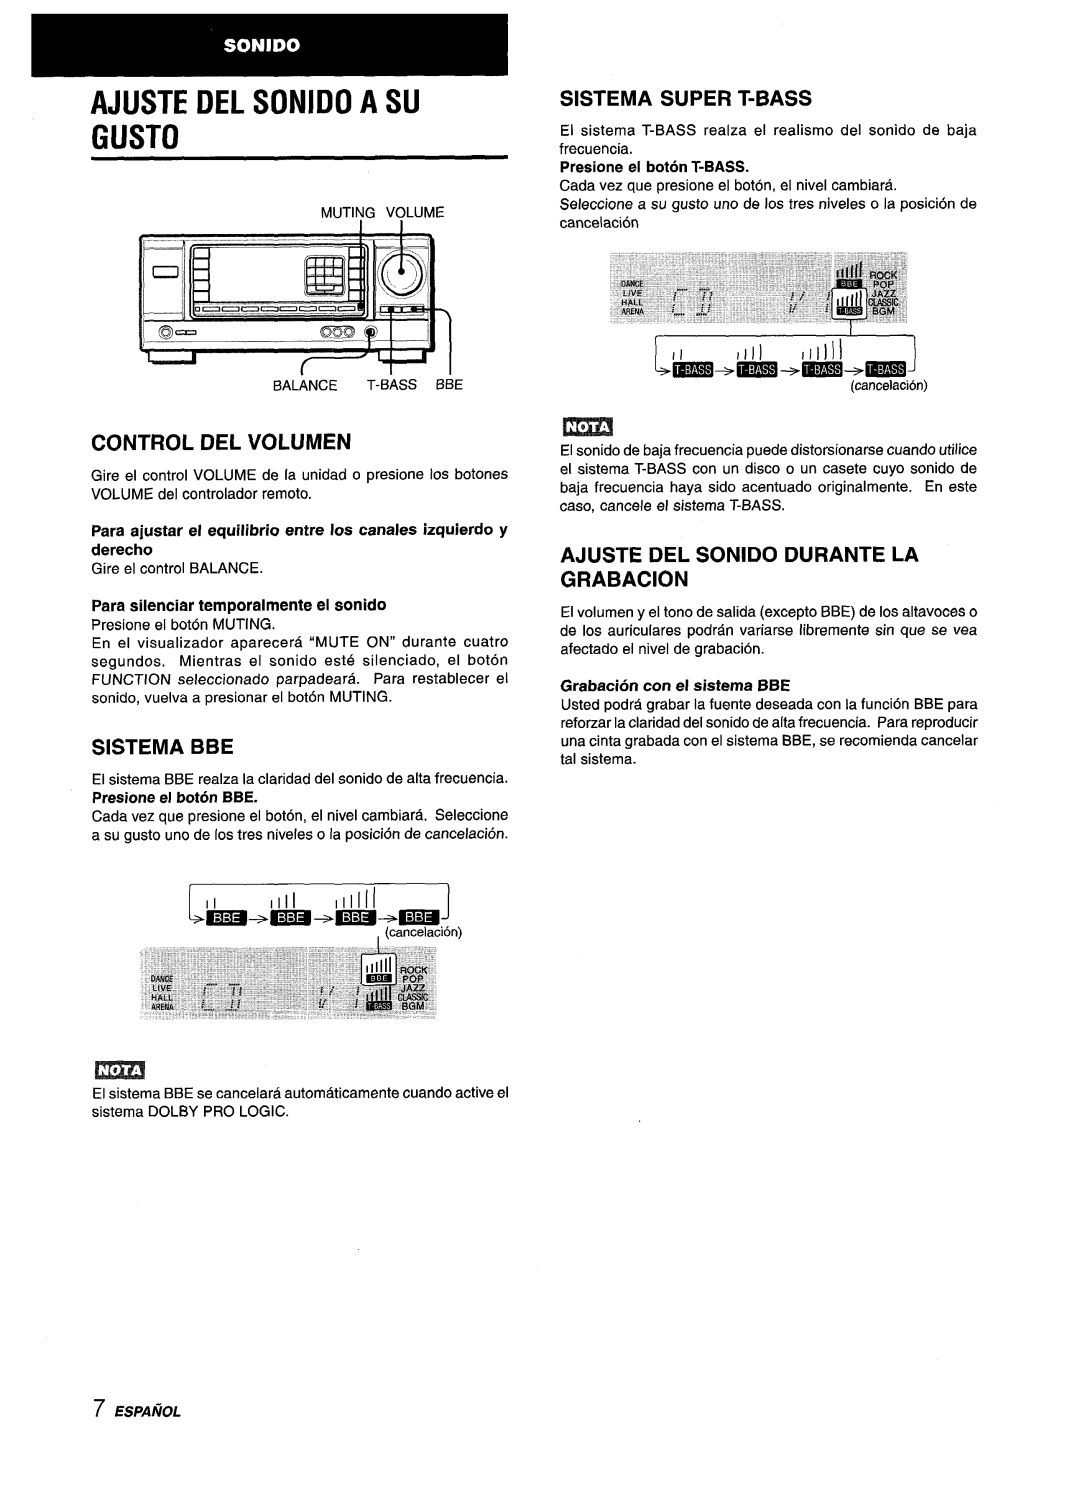 Aiwa AV-X220 Ajuste Del Sonido A Su Gusto, Sistema Super T-Bass, Control Del Volumen, Sistema Bbe, bd&L.mEw4iBm111111 